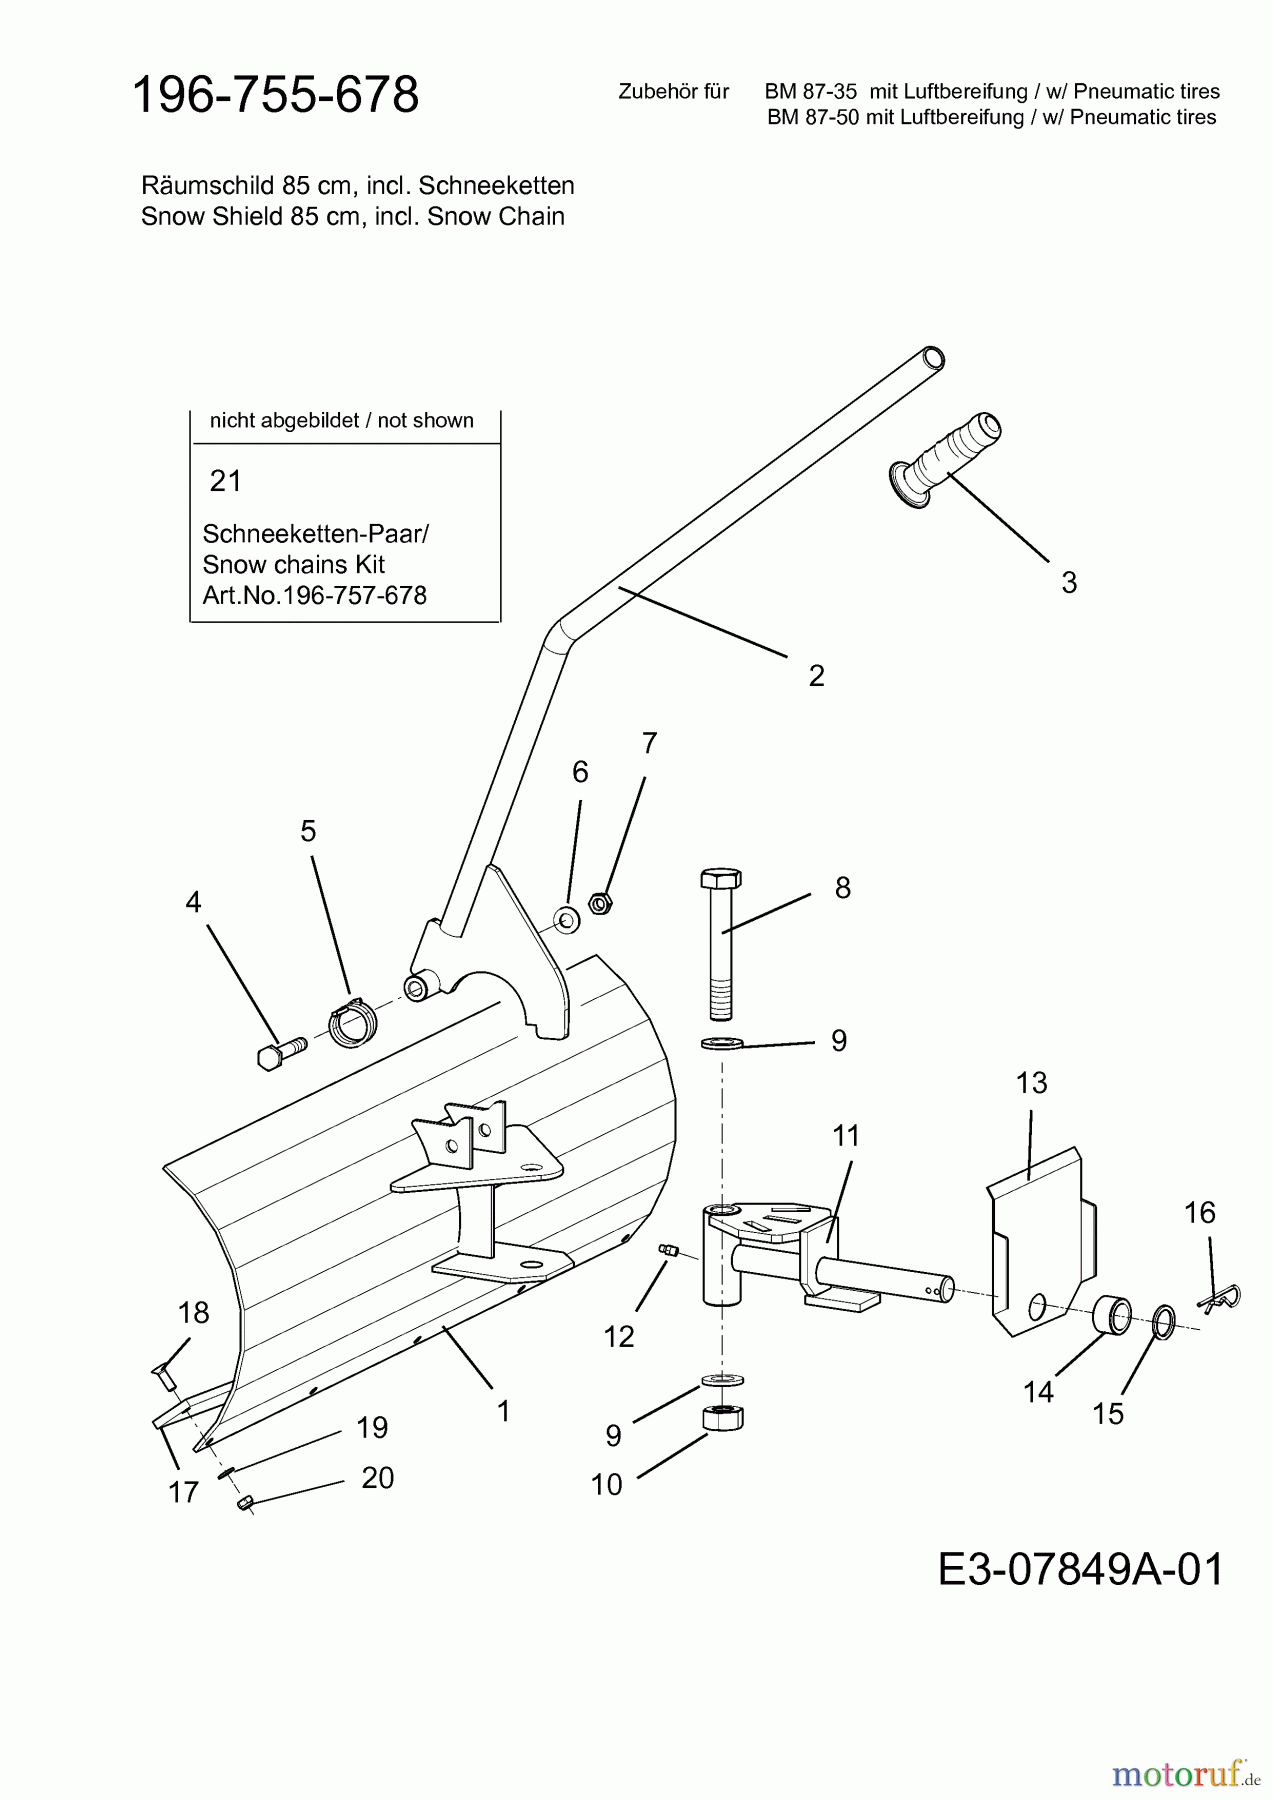  MTD Accessories Accessories cutterbar mower Snow blade for BM 87-35 196-755-678  (2012) Snowblade